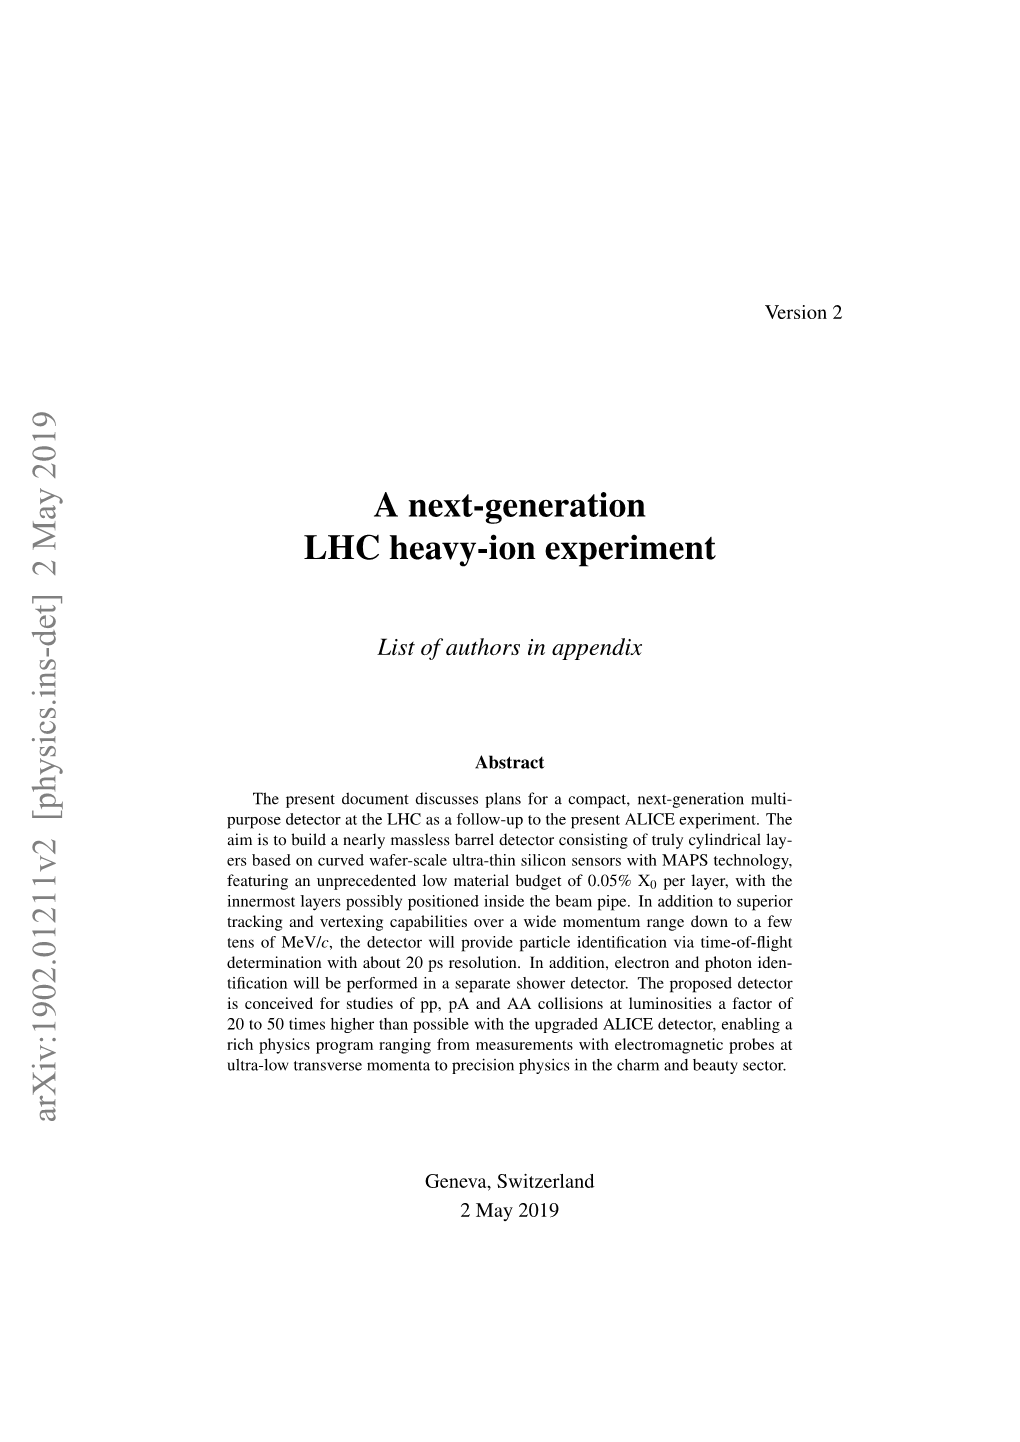 A Next-Generation LHC Heavy-Ion Experiment Arxiv:1902.01211V2 [Physics.Ins-Det] 2 May 2019